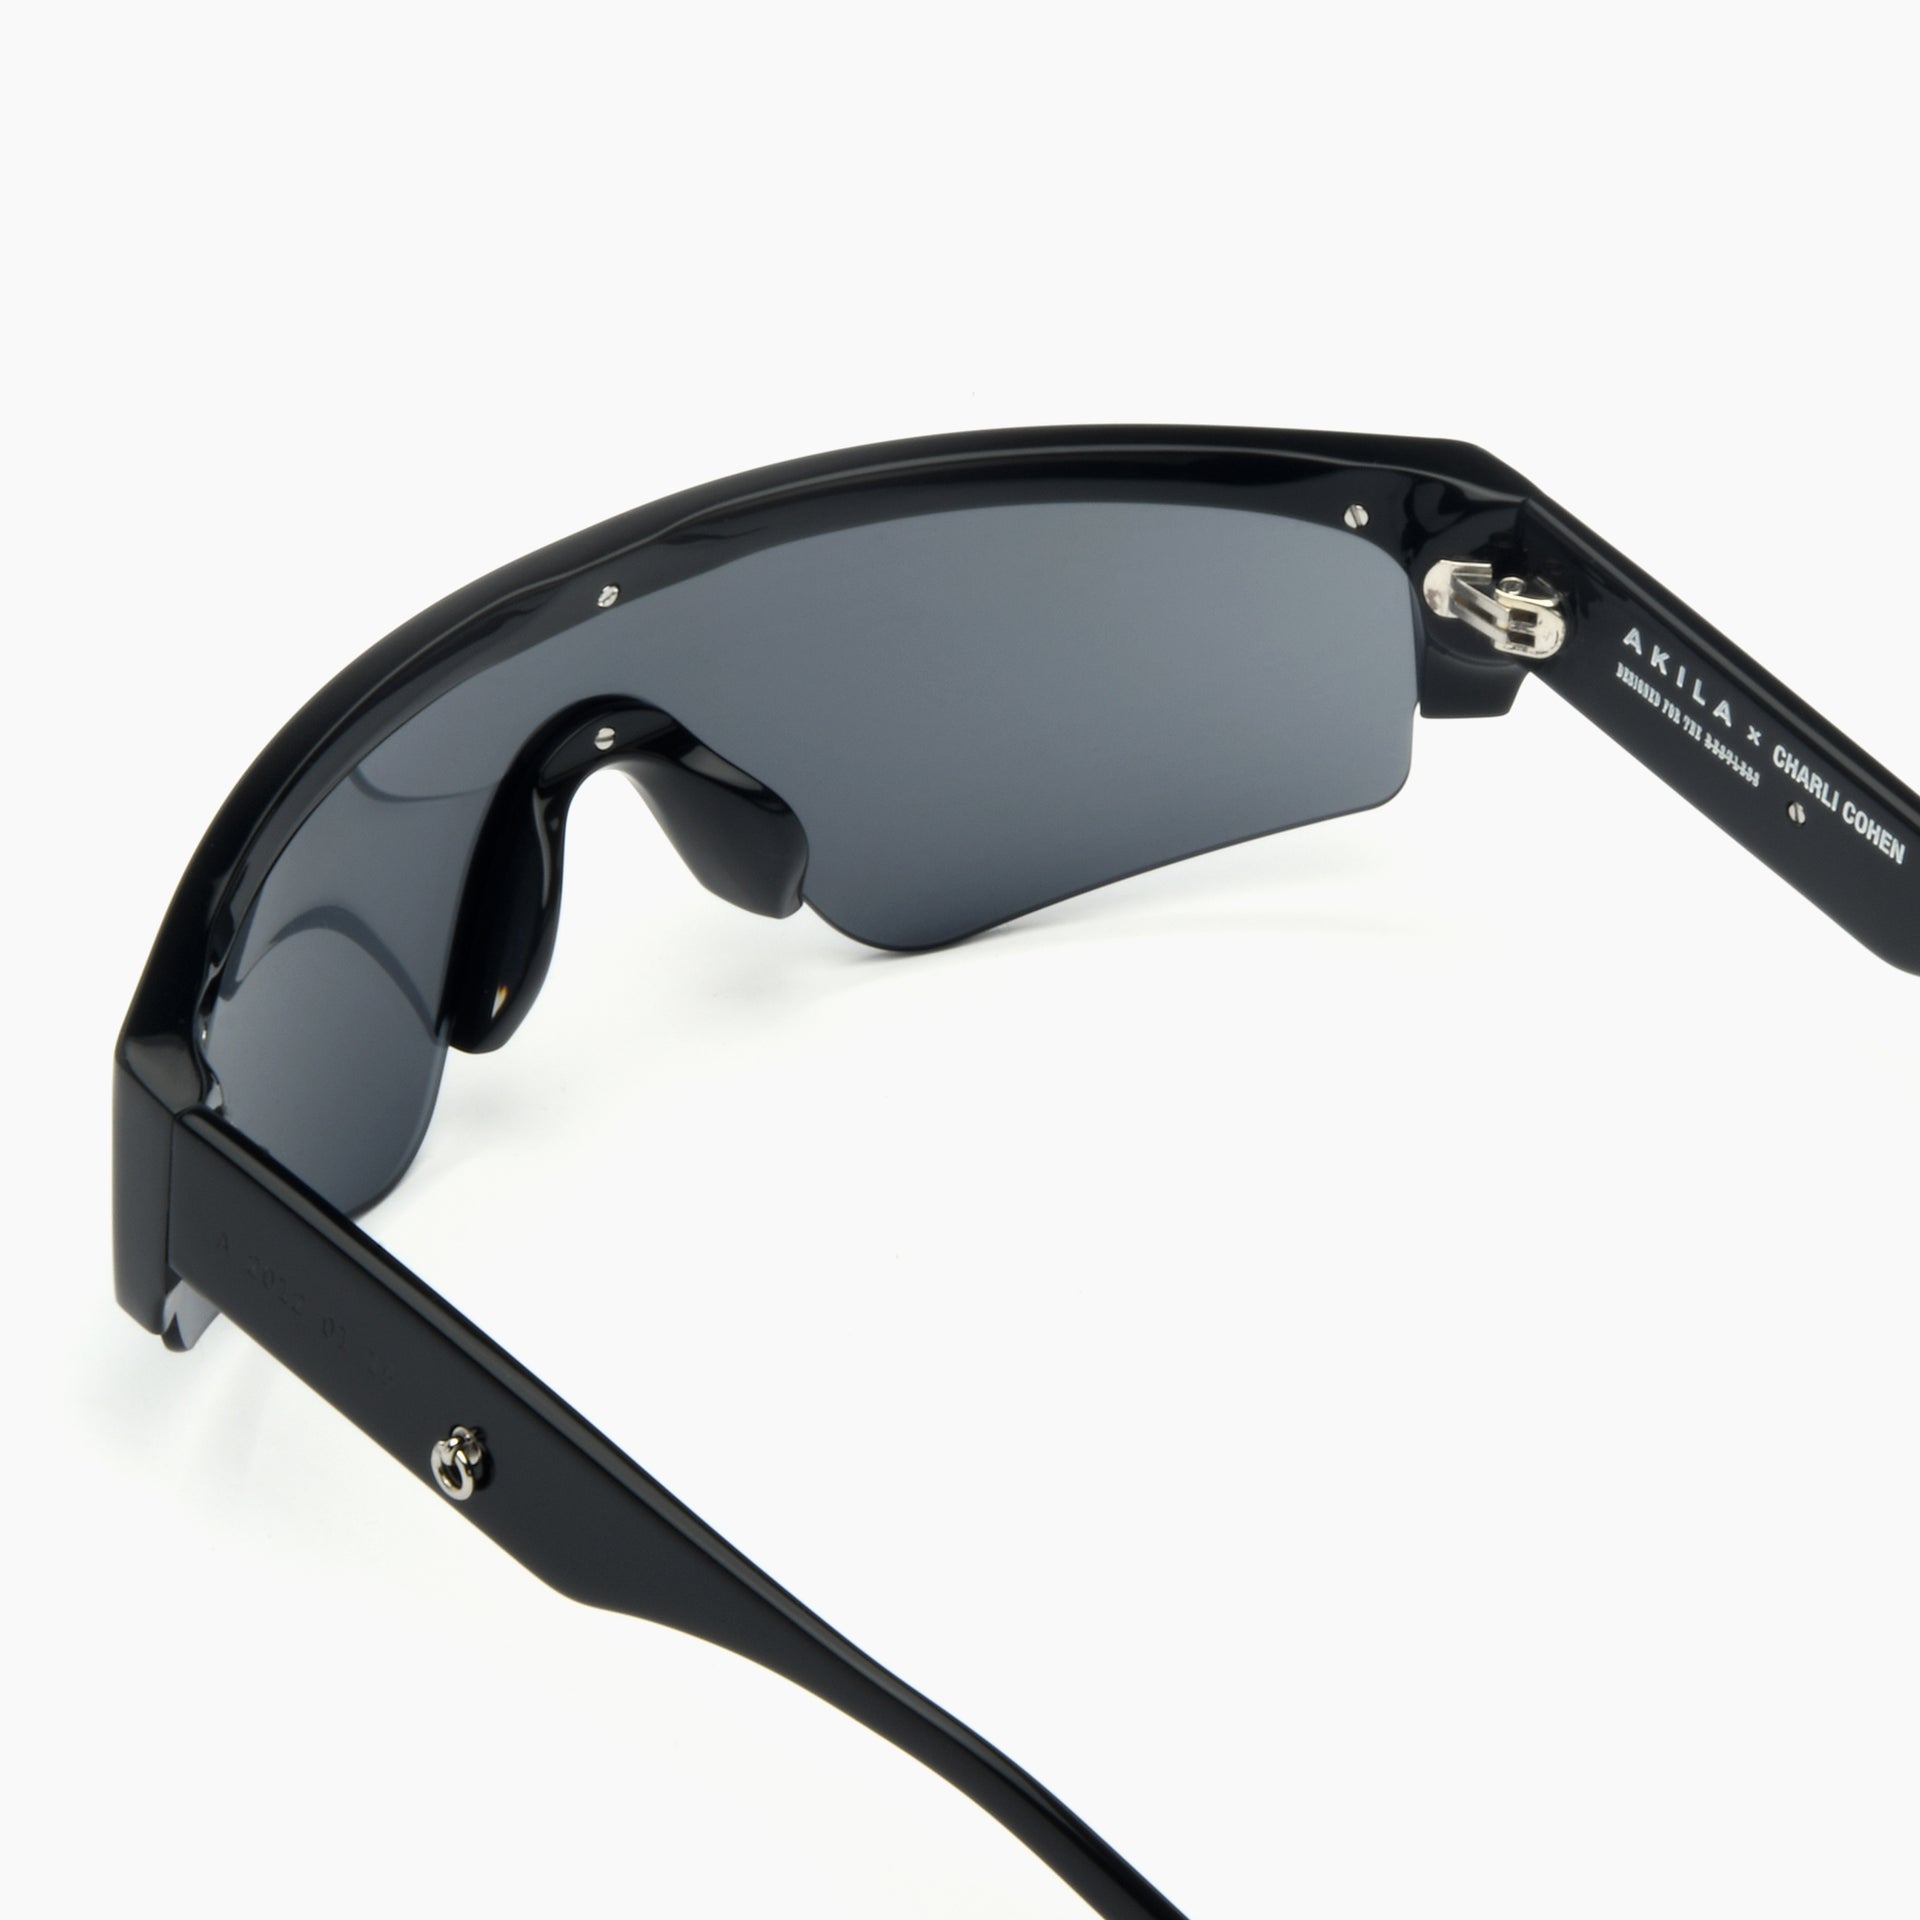 Halo x Charli Cohen Sunglasses - Black/Black